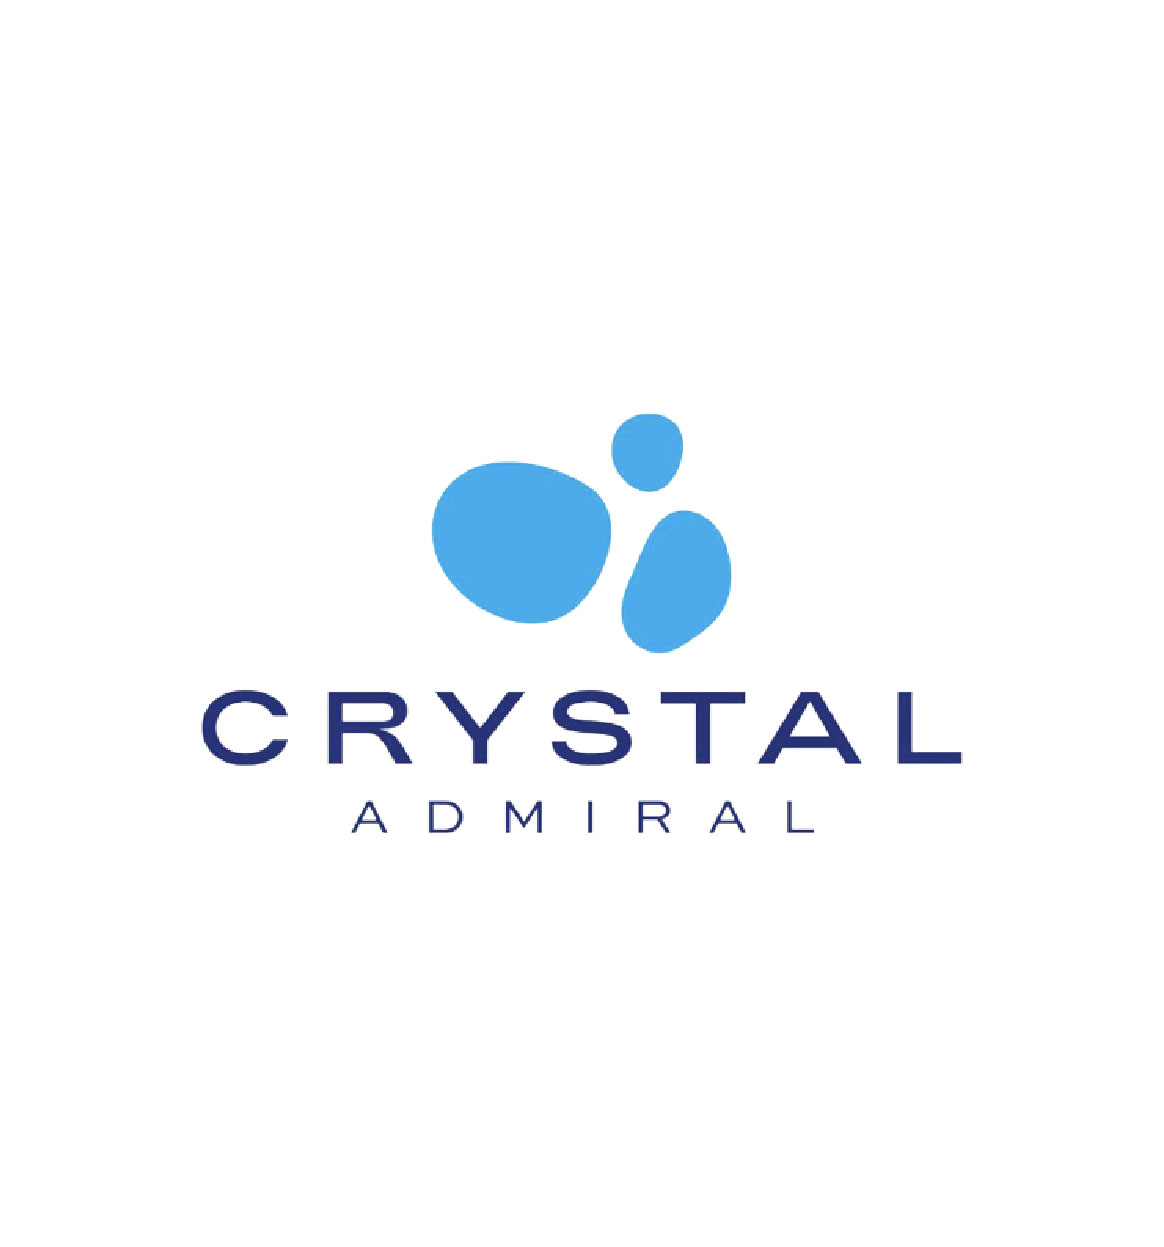 Crystal Admiral